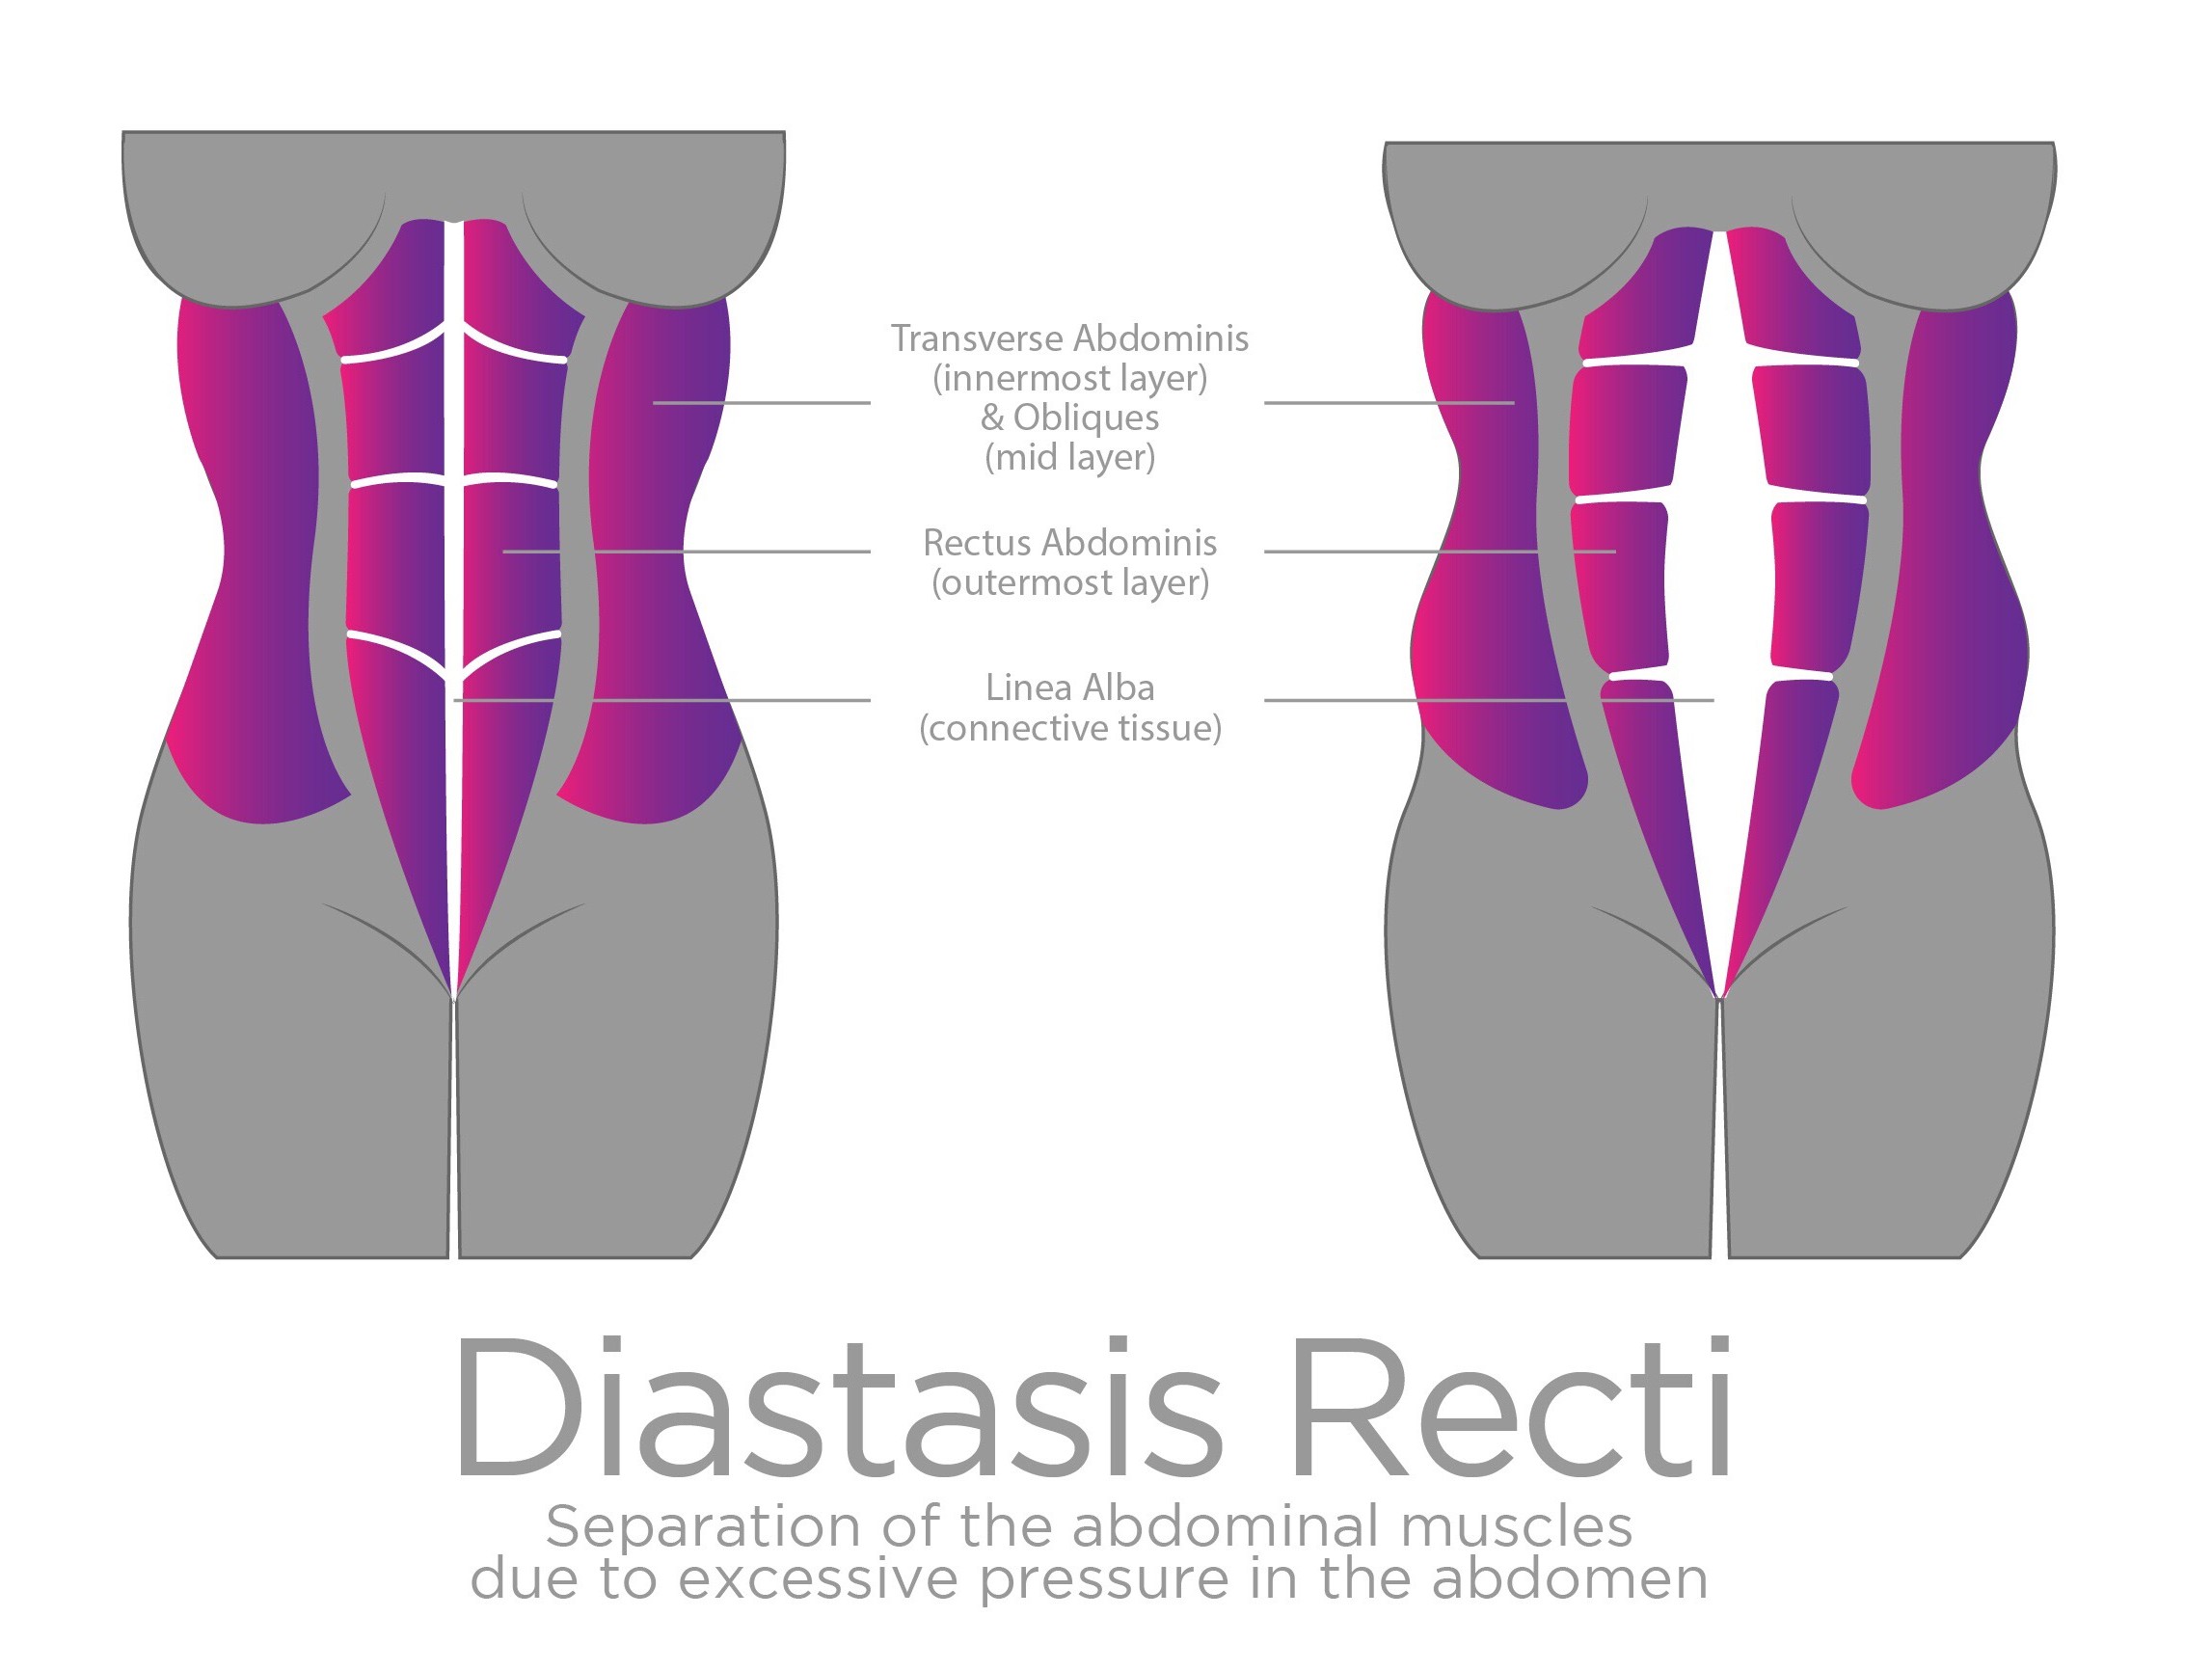 Latest Scientific Research on Diastasis Recti - The Belle Method